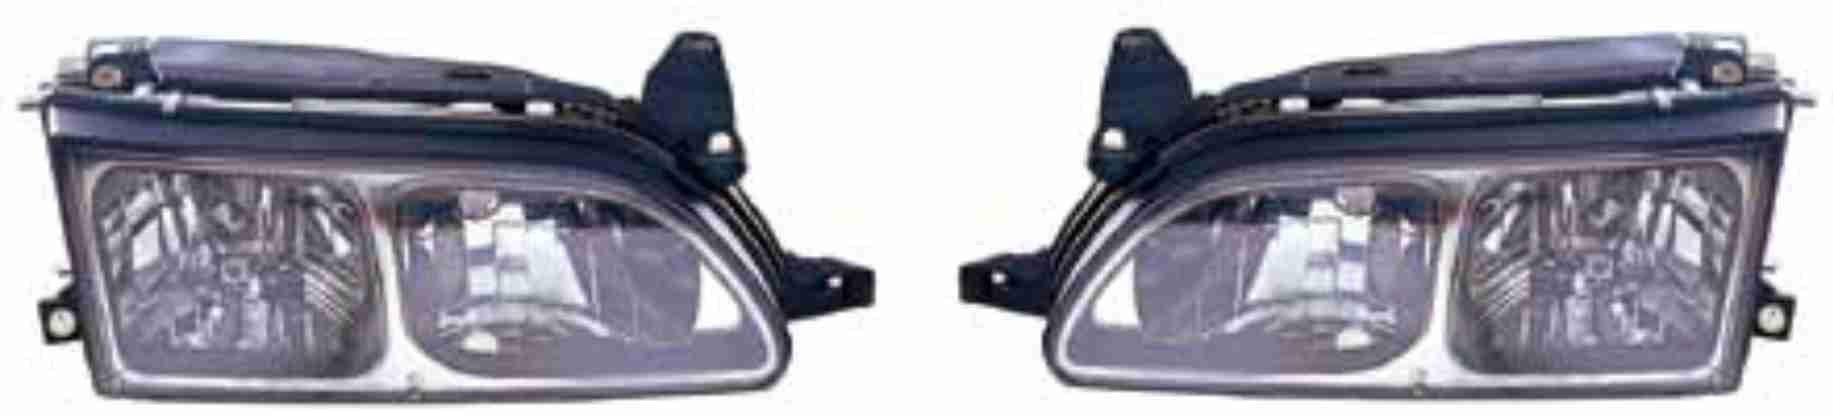 HEA500902 - 2004386 - COROLLA AE100 CHROME DOUBLE HEAD LAMP PAIRS